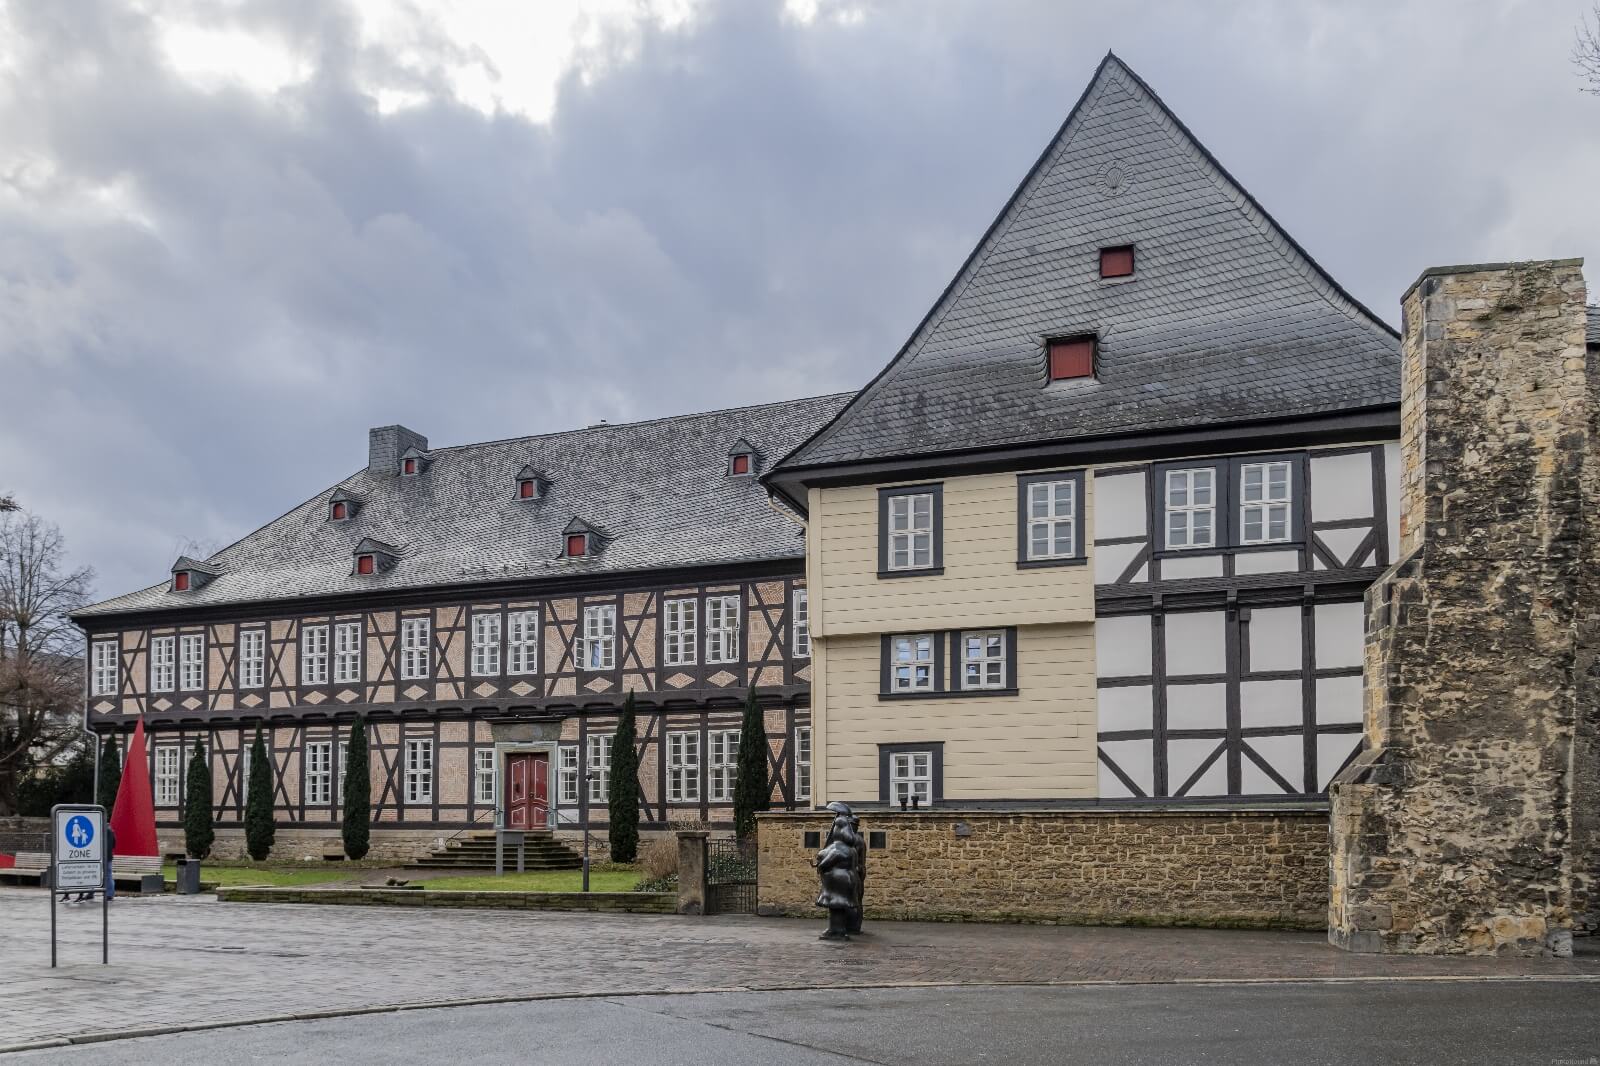 Image of Market Square, Goslar by Steven Godwin